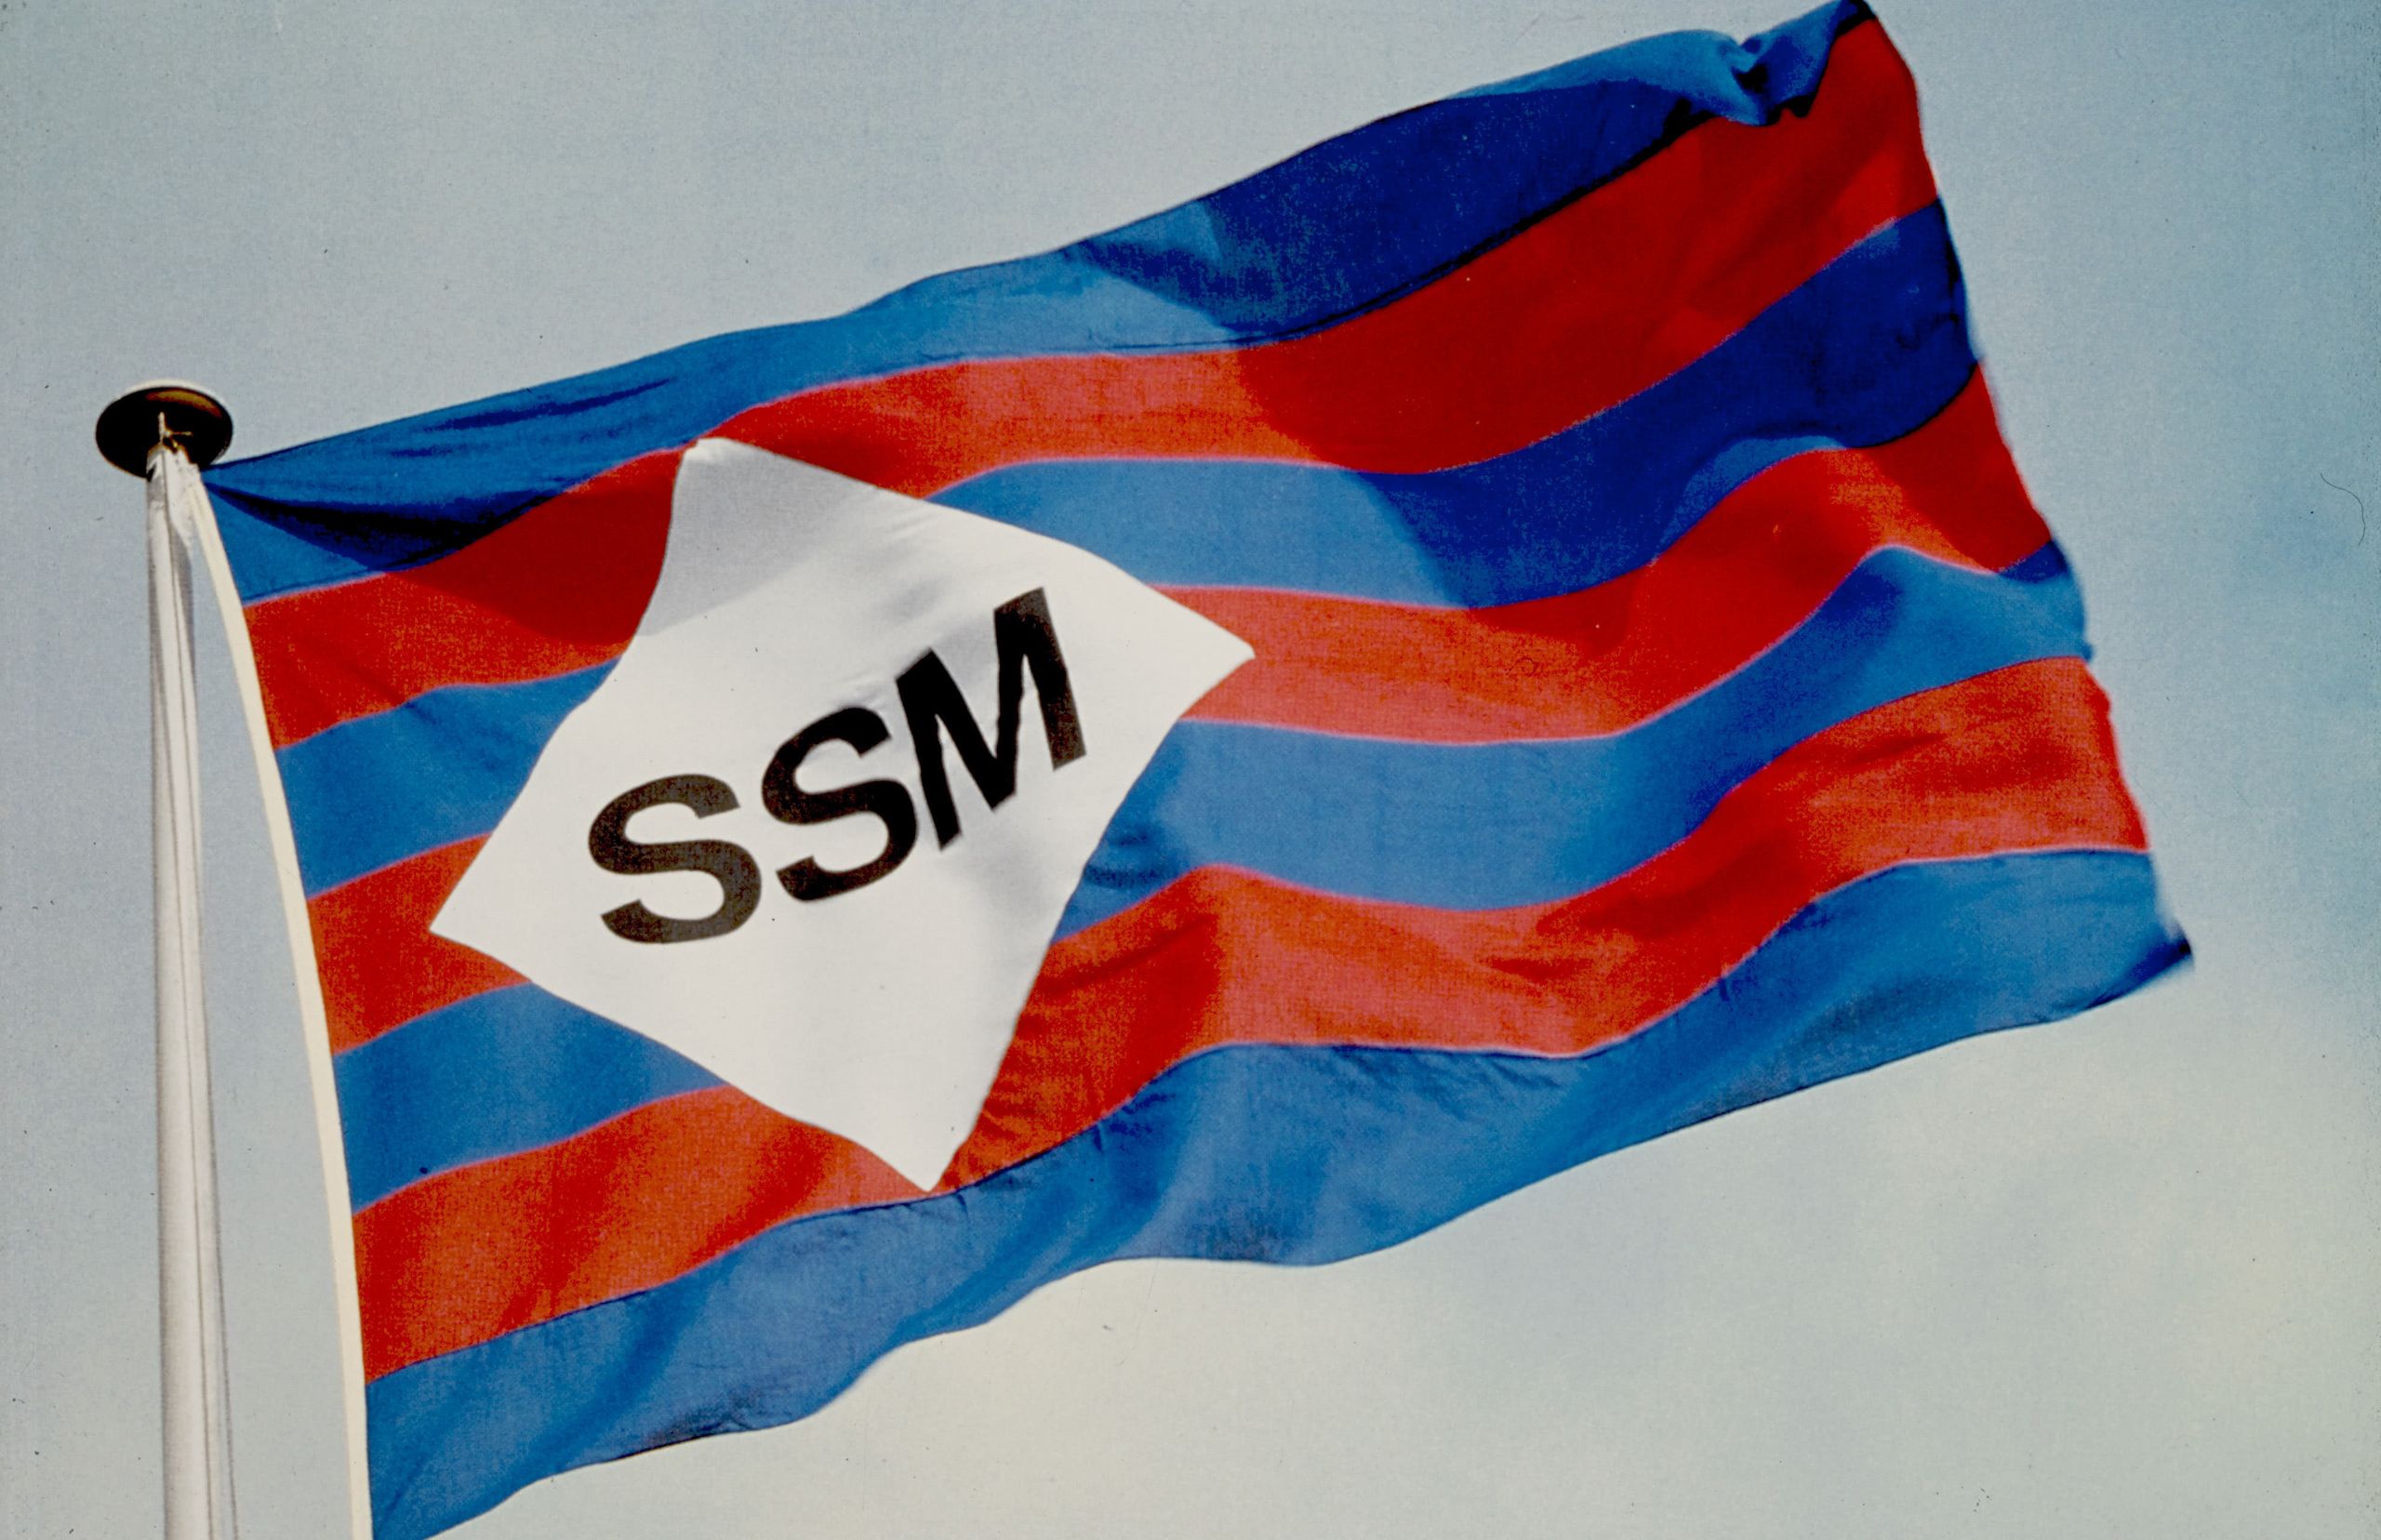 A flag bearing the SSM logo c. 1970.